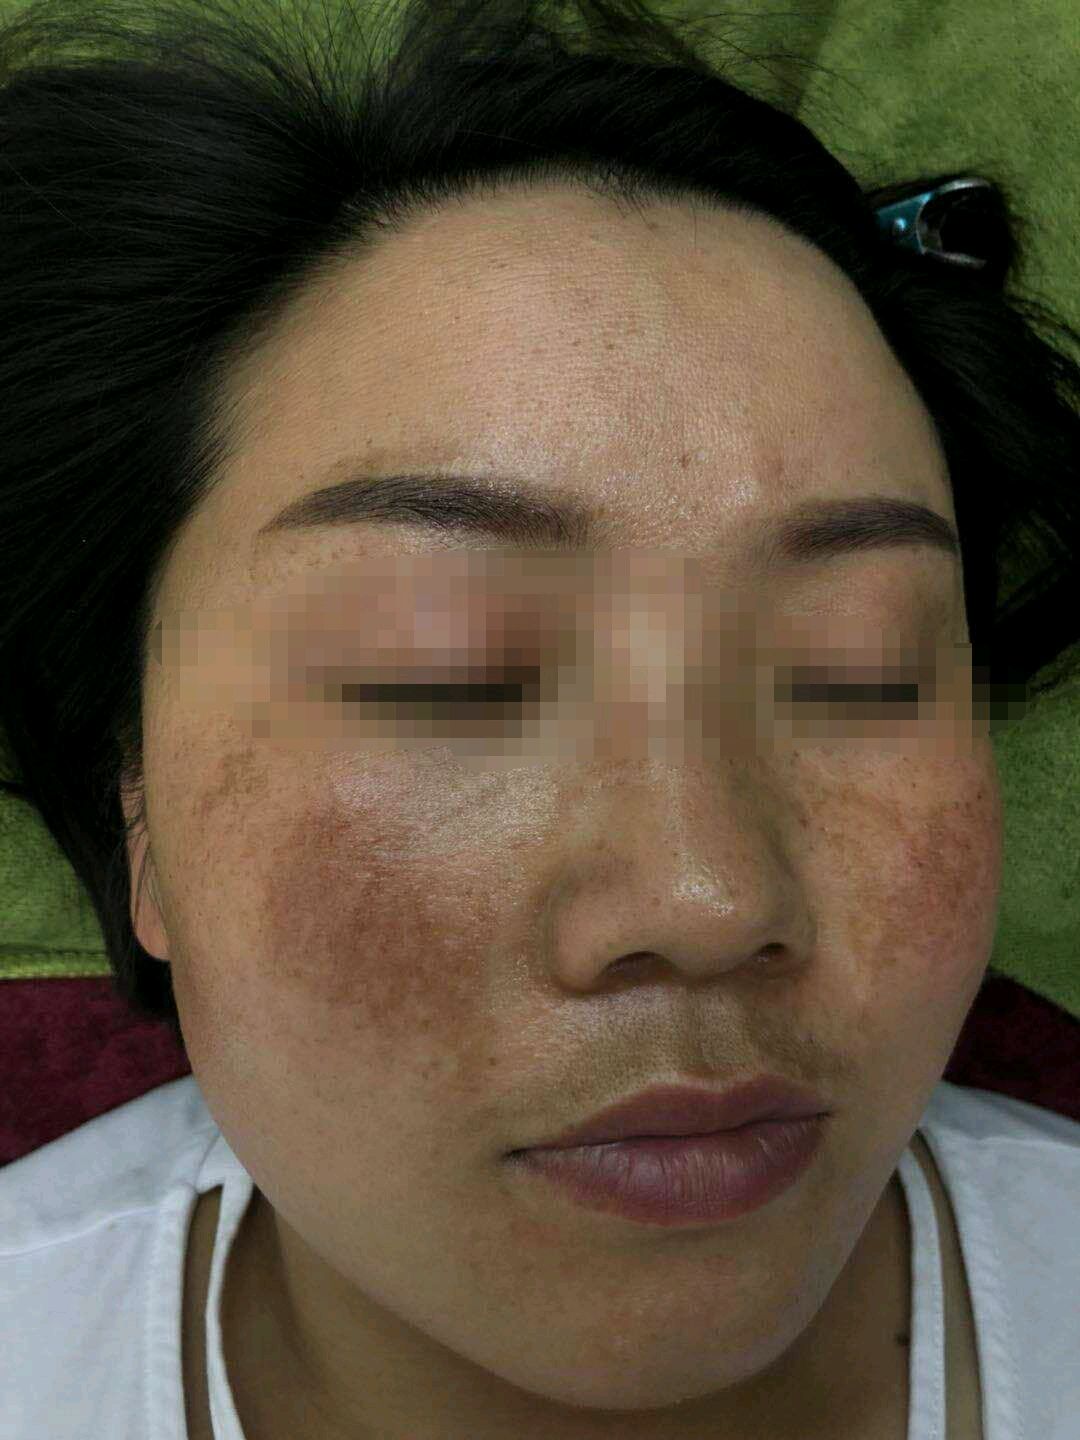 【醫學美容】40歲男子激光美容後 面部嚴重燒傷毁容求助 | Health Concept | LINE TODAY